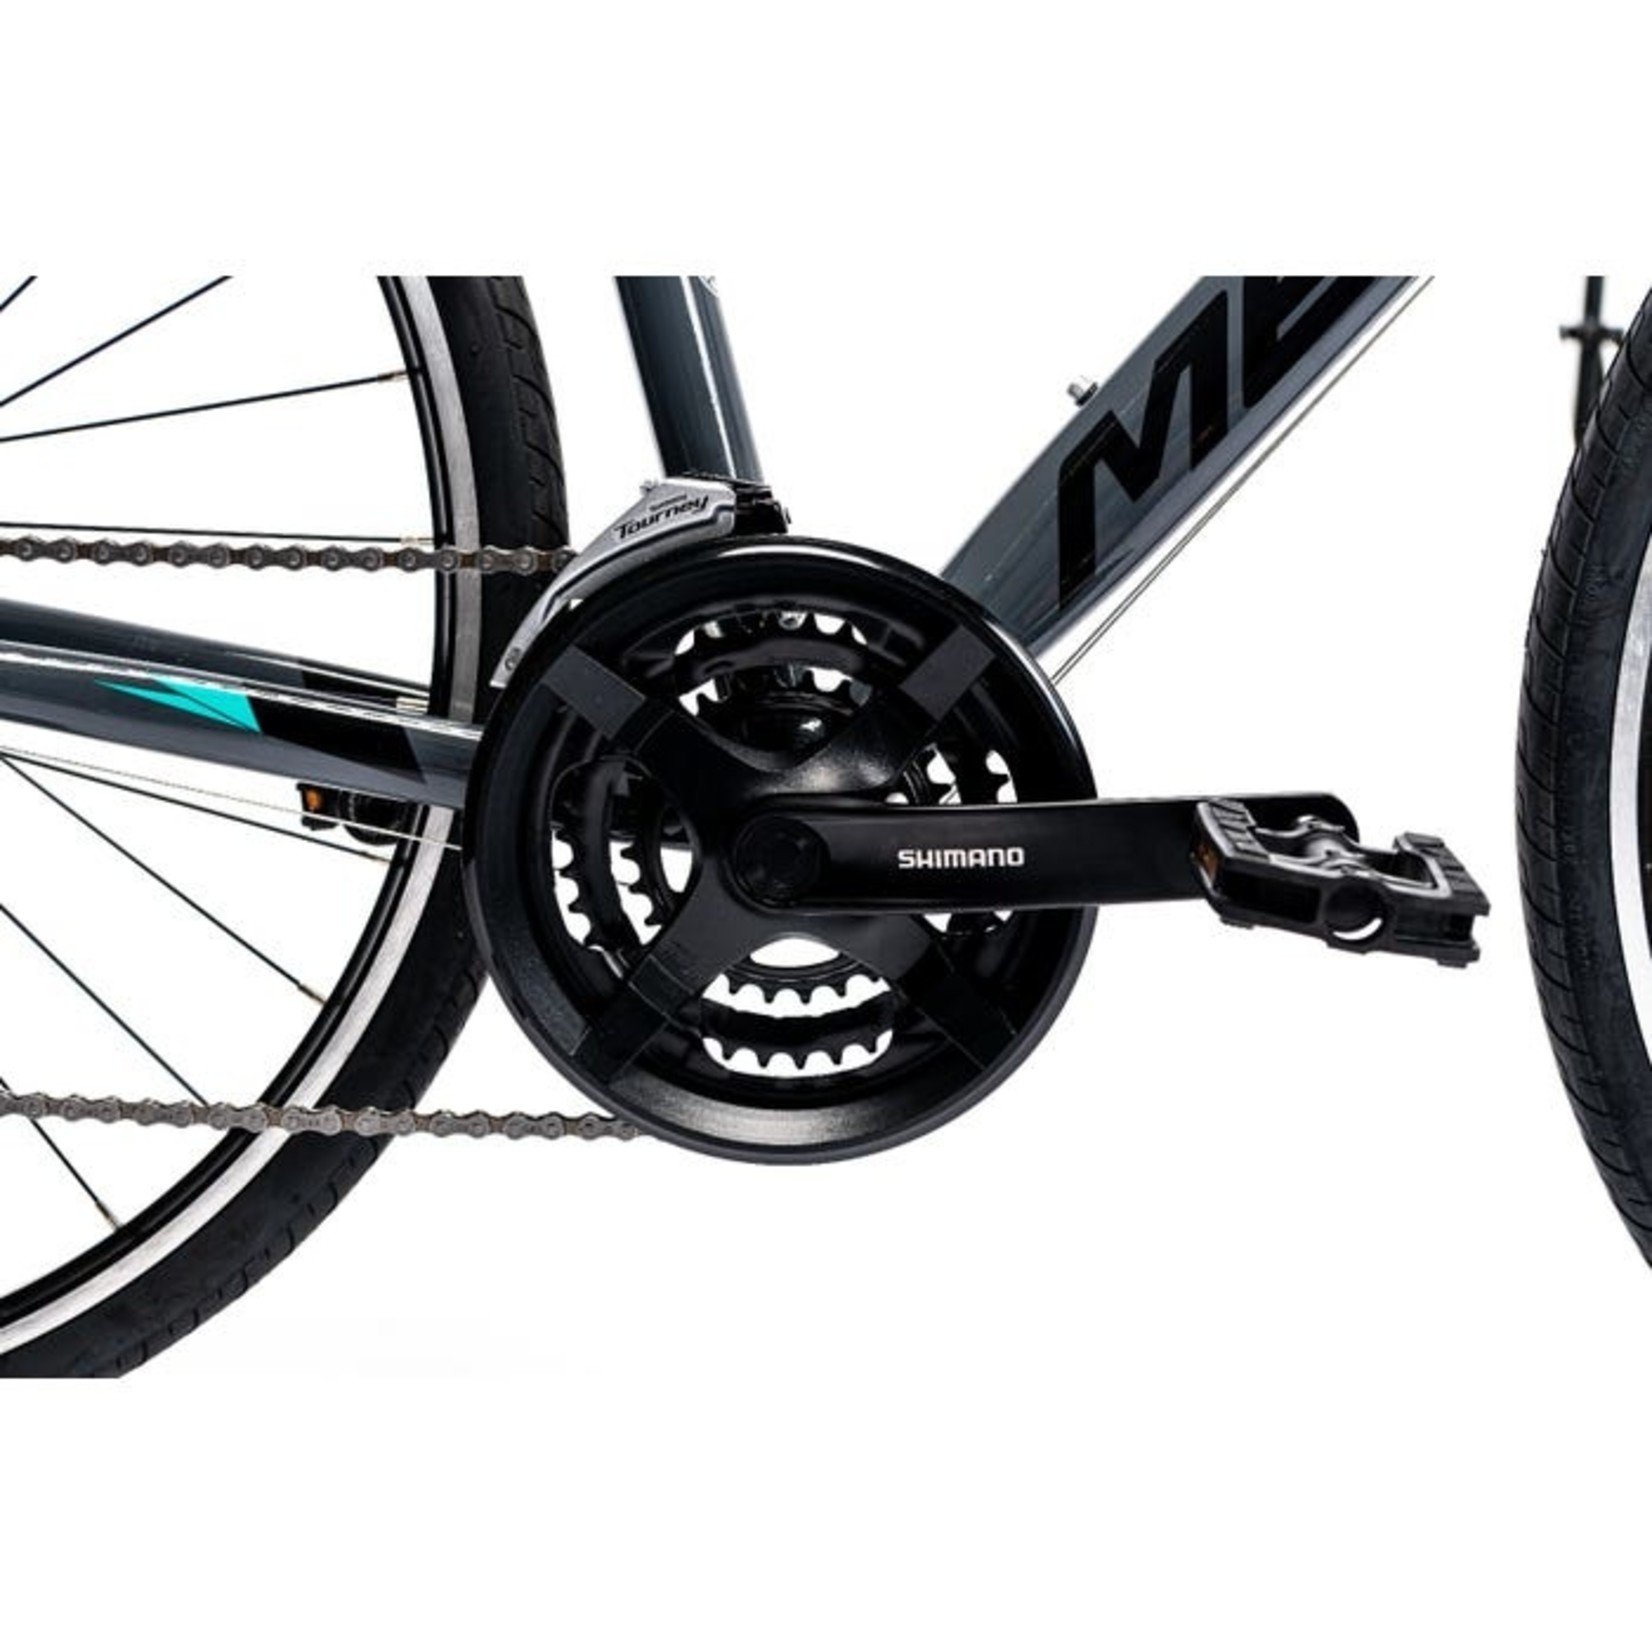 Merida Merida 2021 Speeder 10 V Women's Road Bike - Glossy Grey(Black/Teal) - Small